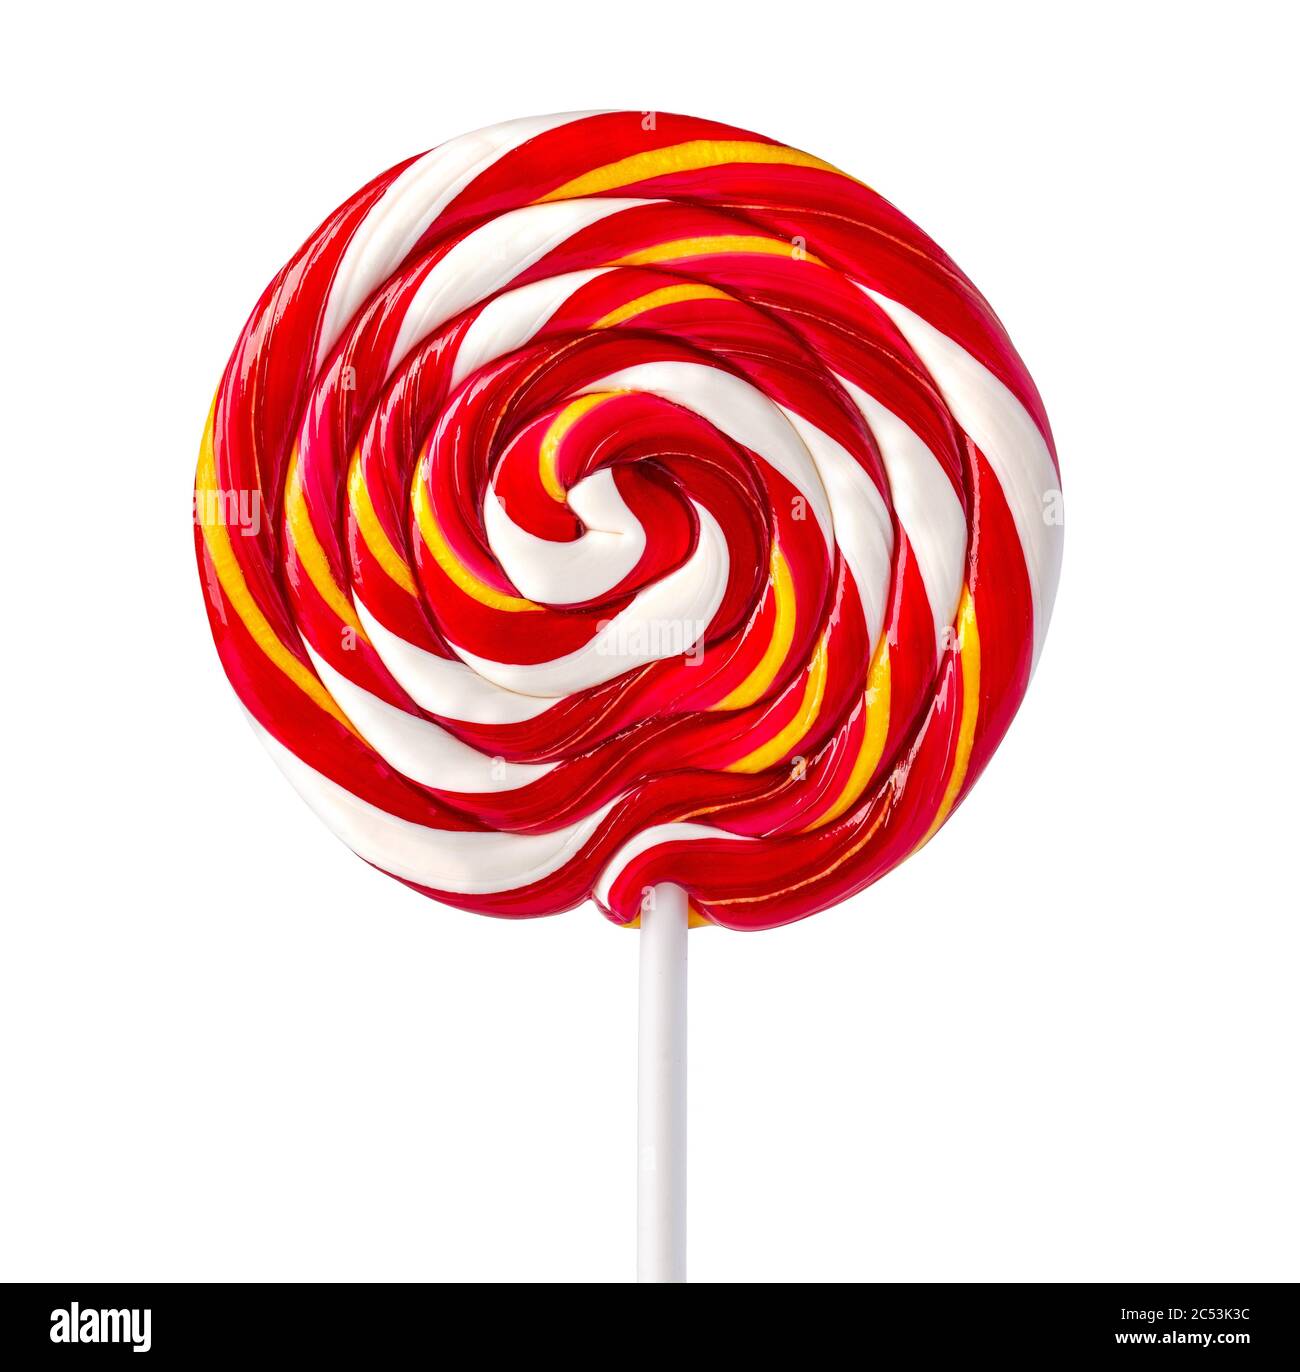 https://c8.alamy.com/comp/2C53K3C/colorful-lollipop-swirl-on-white-stick-isolated-on-white-background-2C53K3C.jpg